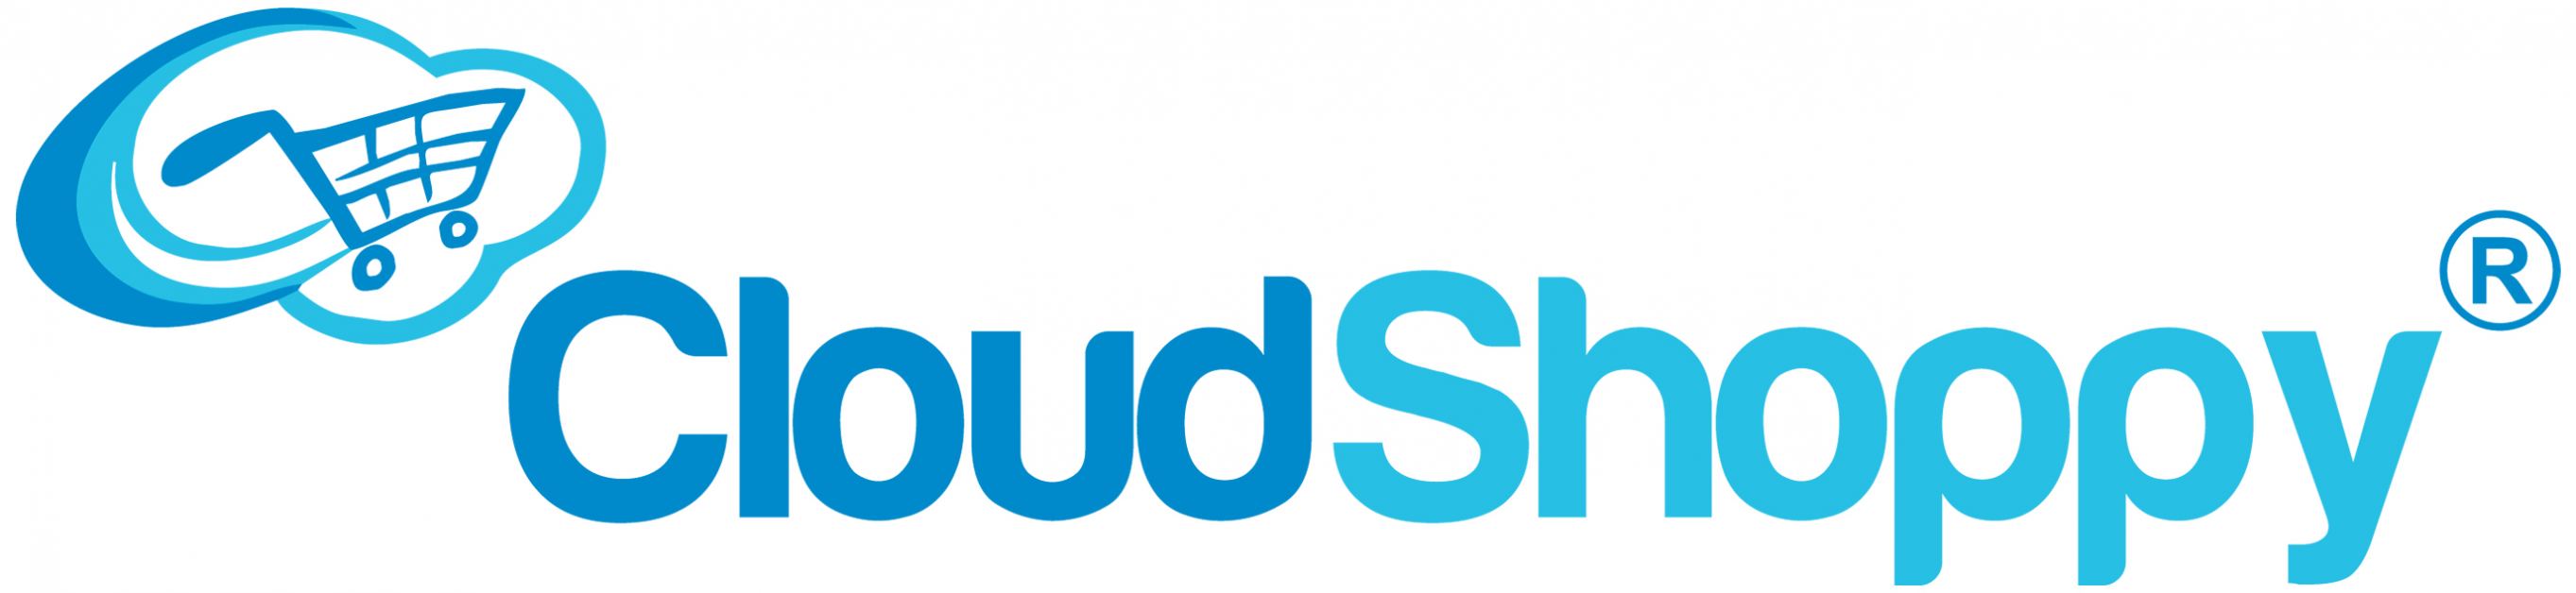 cloudshoppy Logo